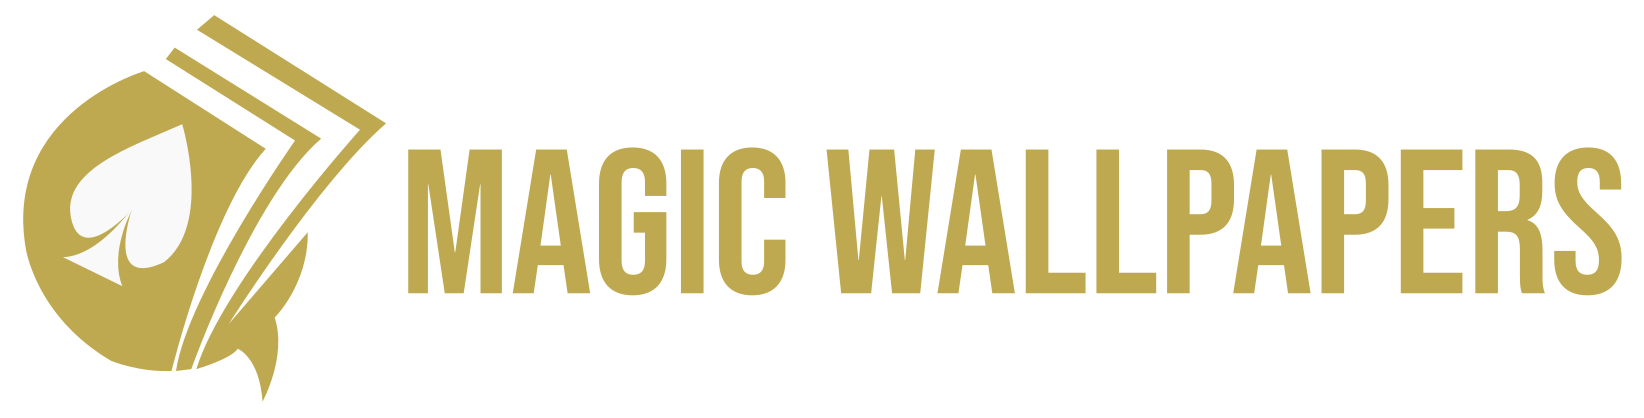 Magic Wallpapers logo